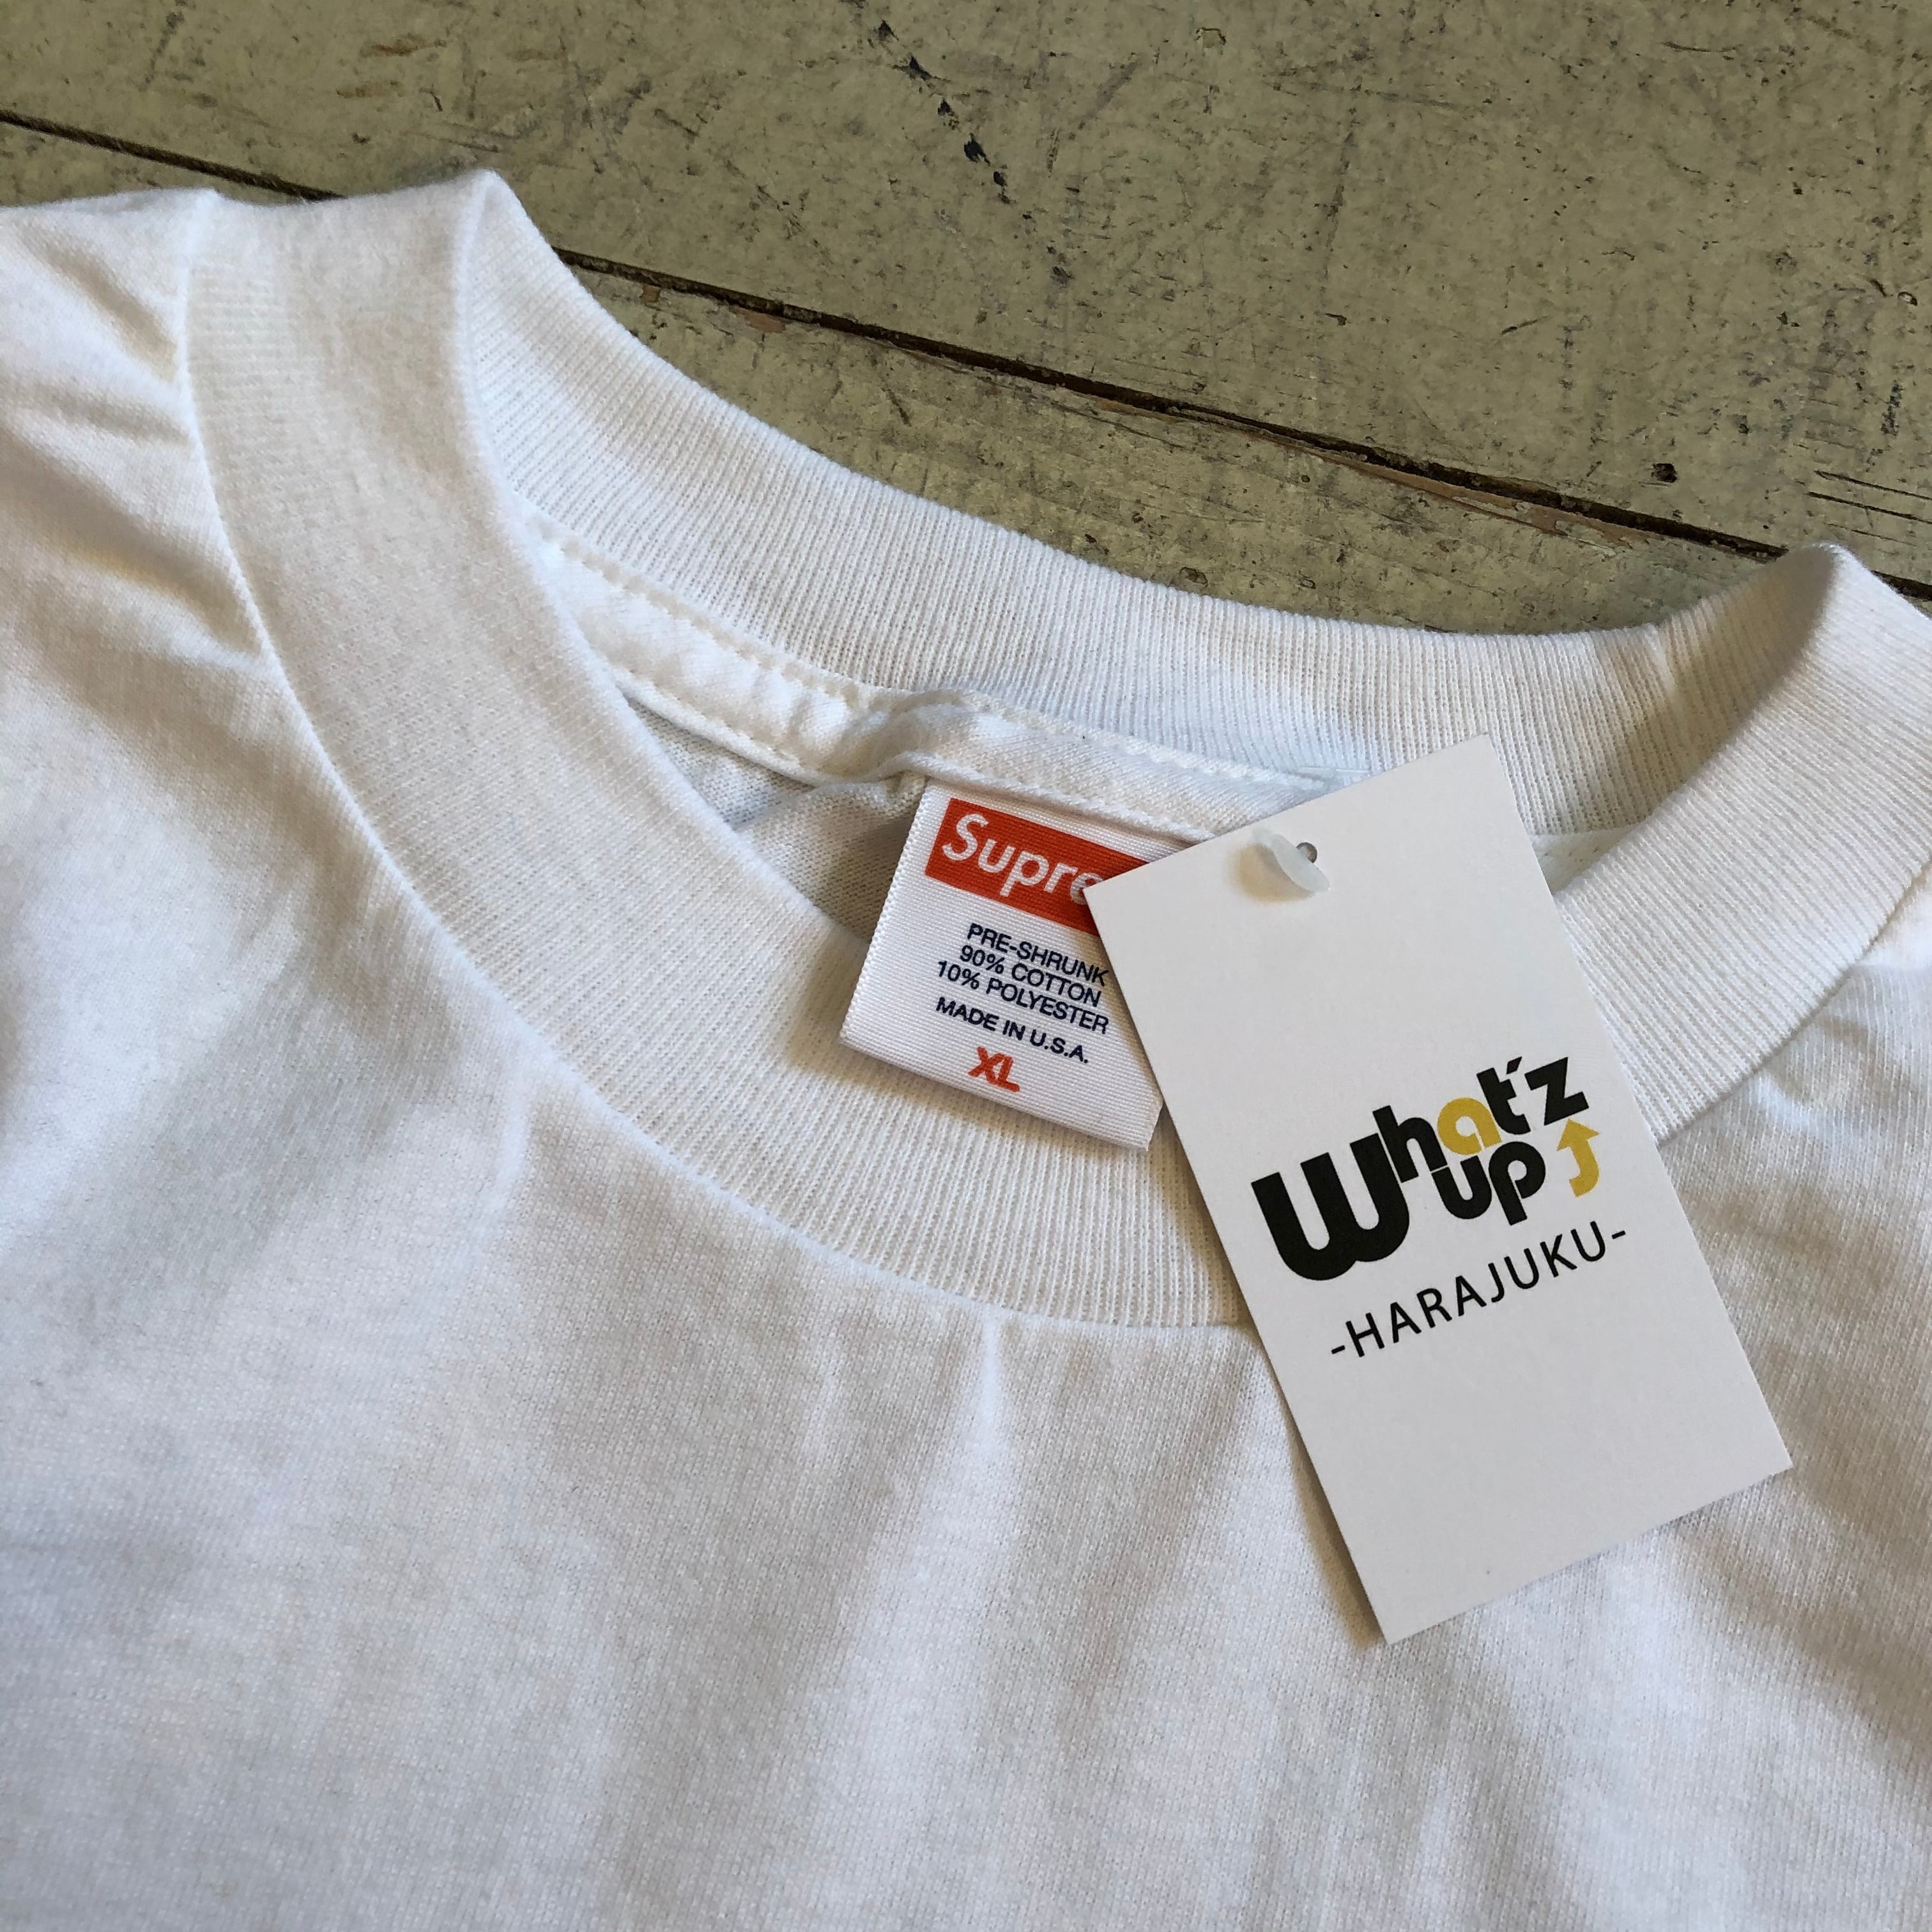 Supreme T-Shirts & Stickers Sticker FW07 NOS New Rare